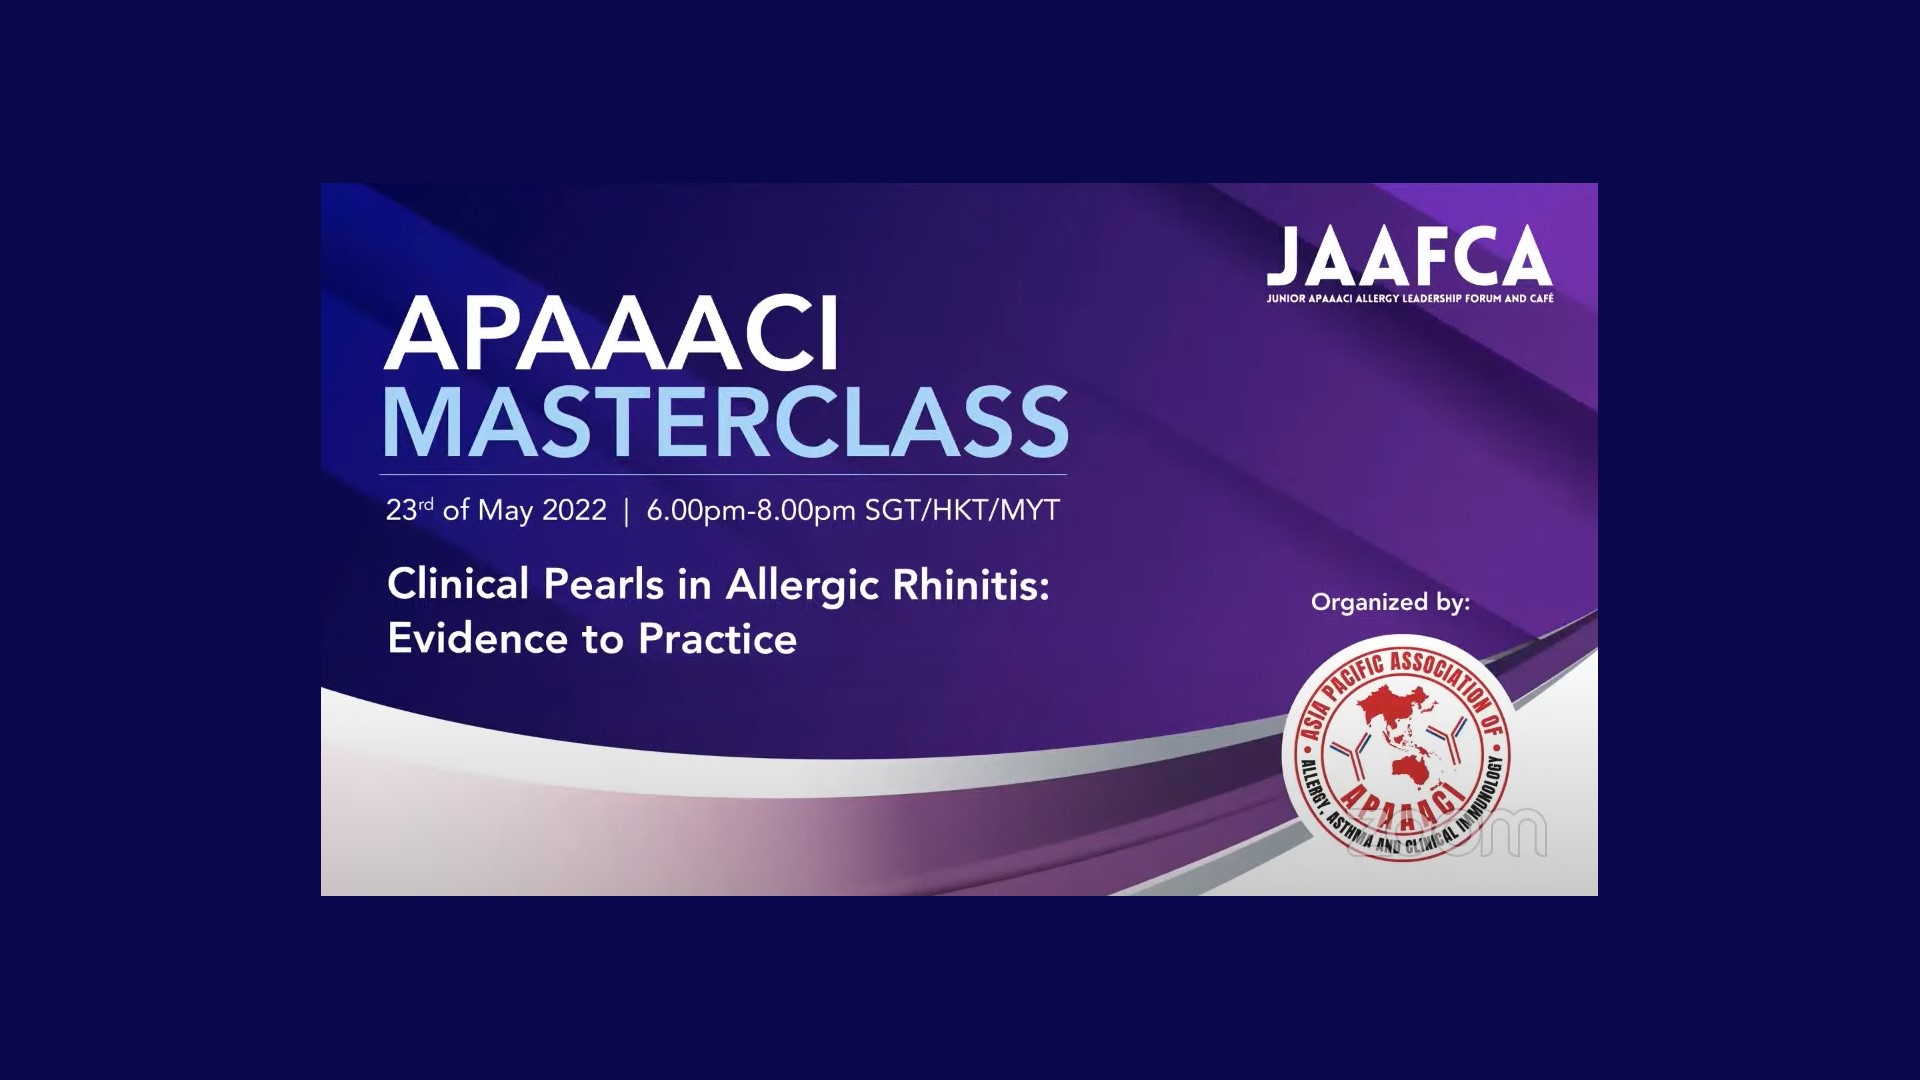 The APAAACI MasterClass on Clinical Pearls in Allergic Rhinitis